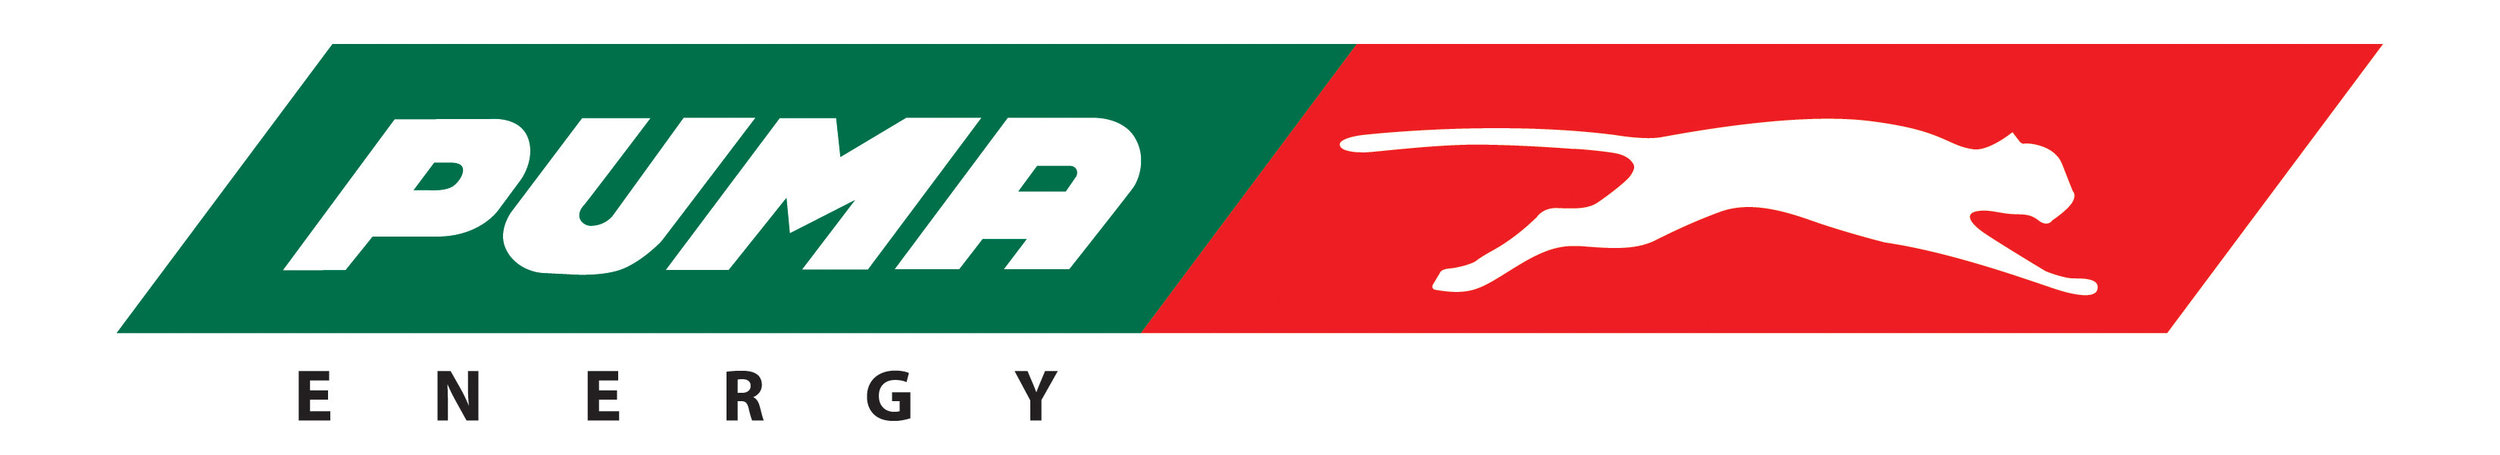 Puma_Energy_Logo.jpg